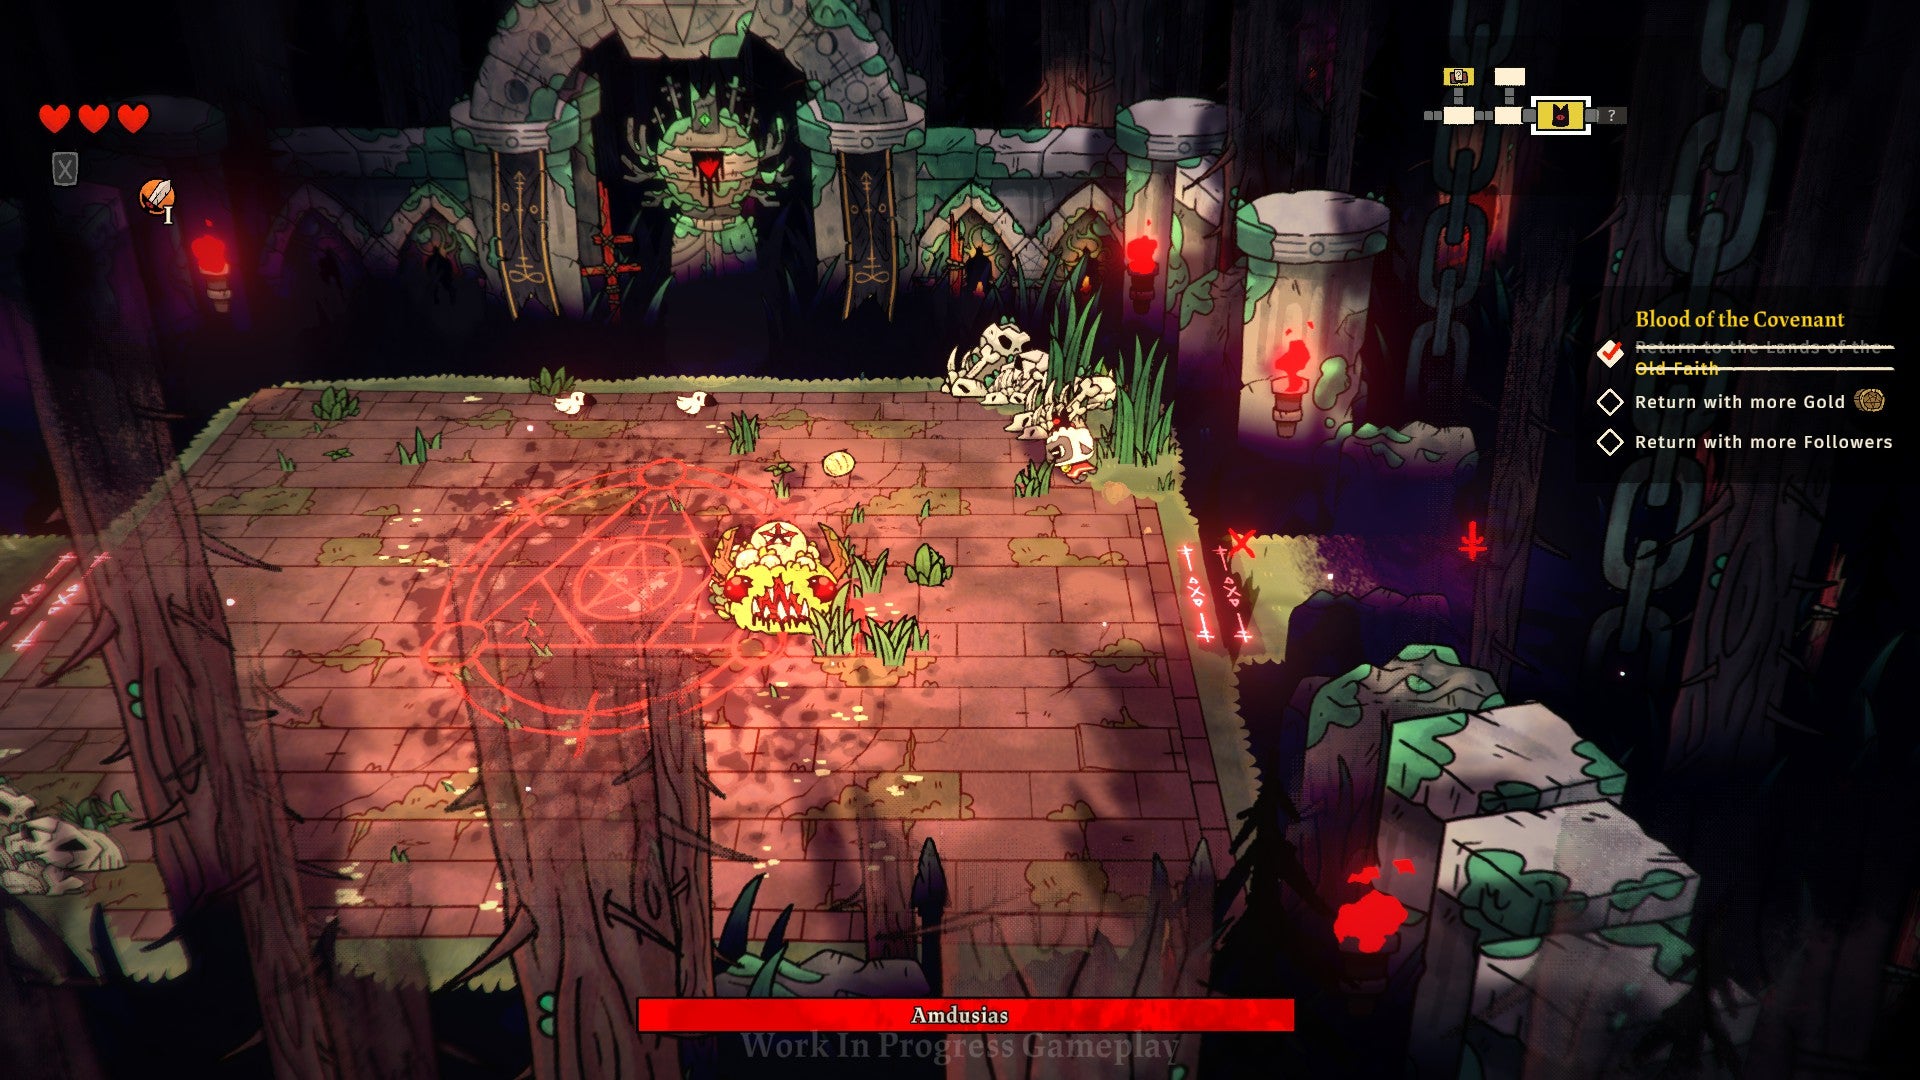 An adorable lamb runs around a Zelda-like arena fighting a slug-like boss.